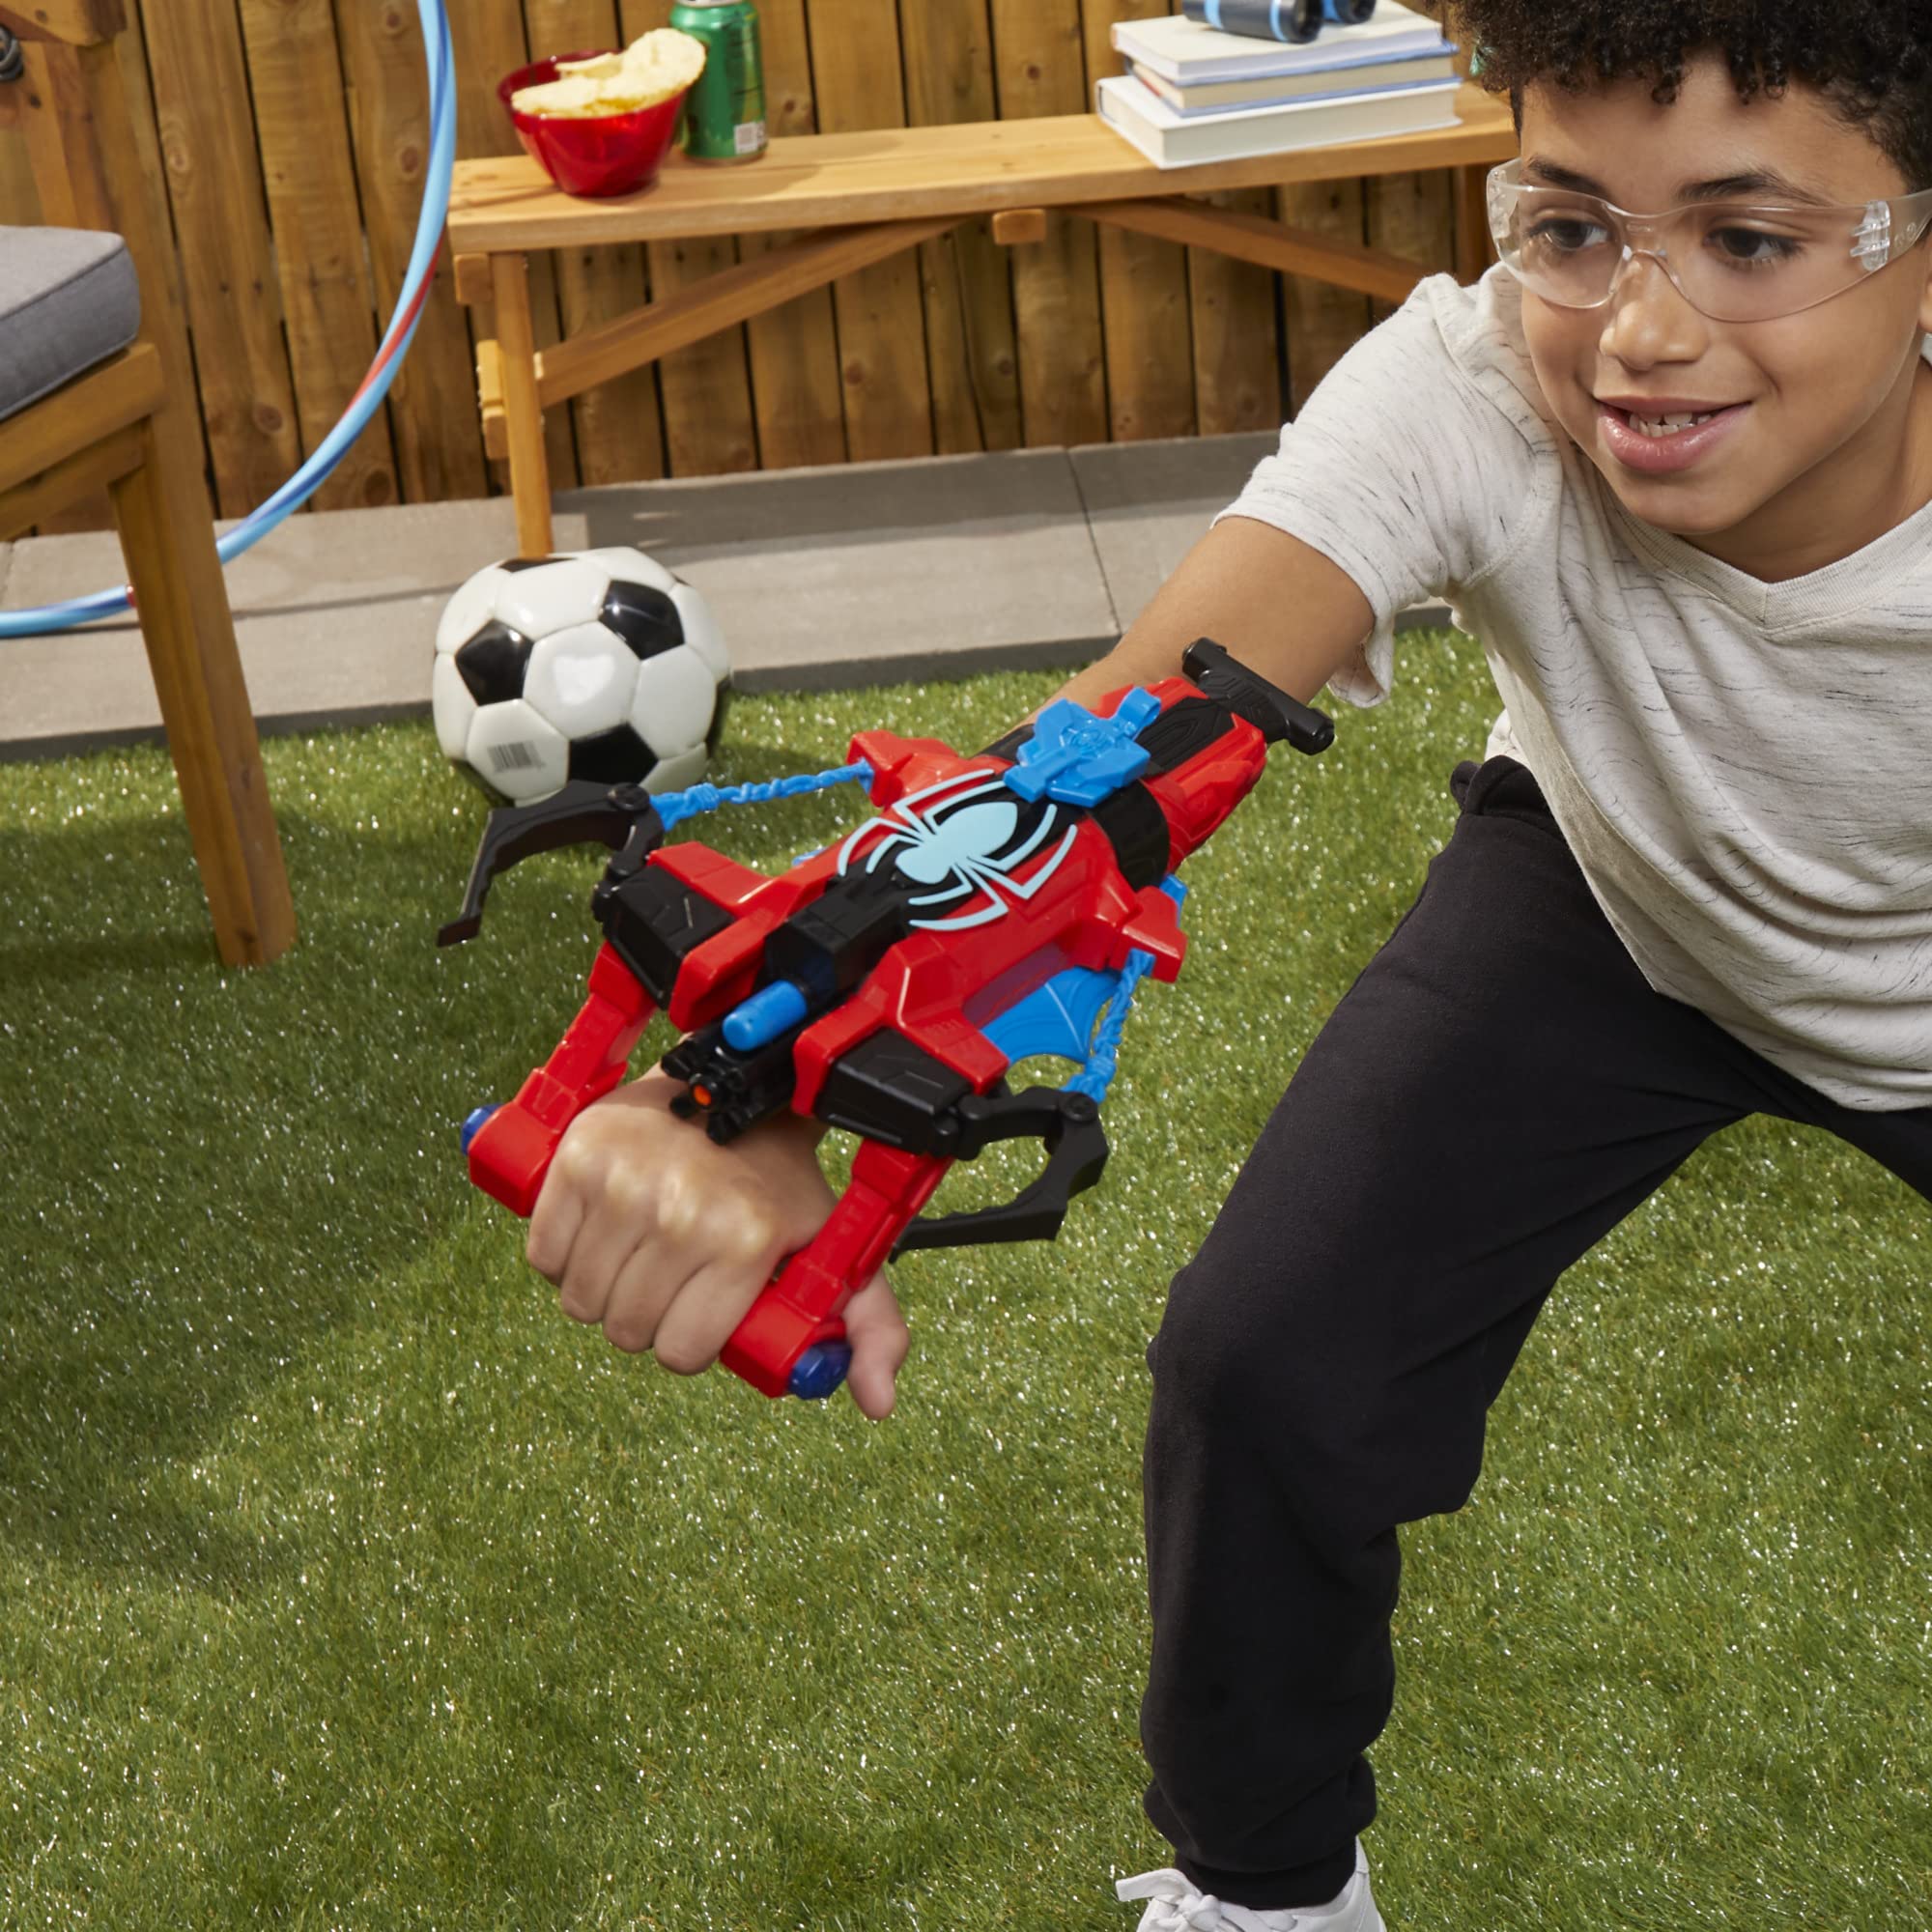 Spider-Man Marvel Spider Strike ‘N Splash Blaster, Super Hero Toys for Kids, Ages 5 and Up, Nerf Blaster for Kids, Water Blast Feature, Marvel Toys